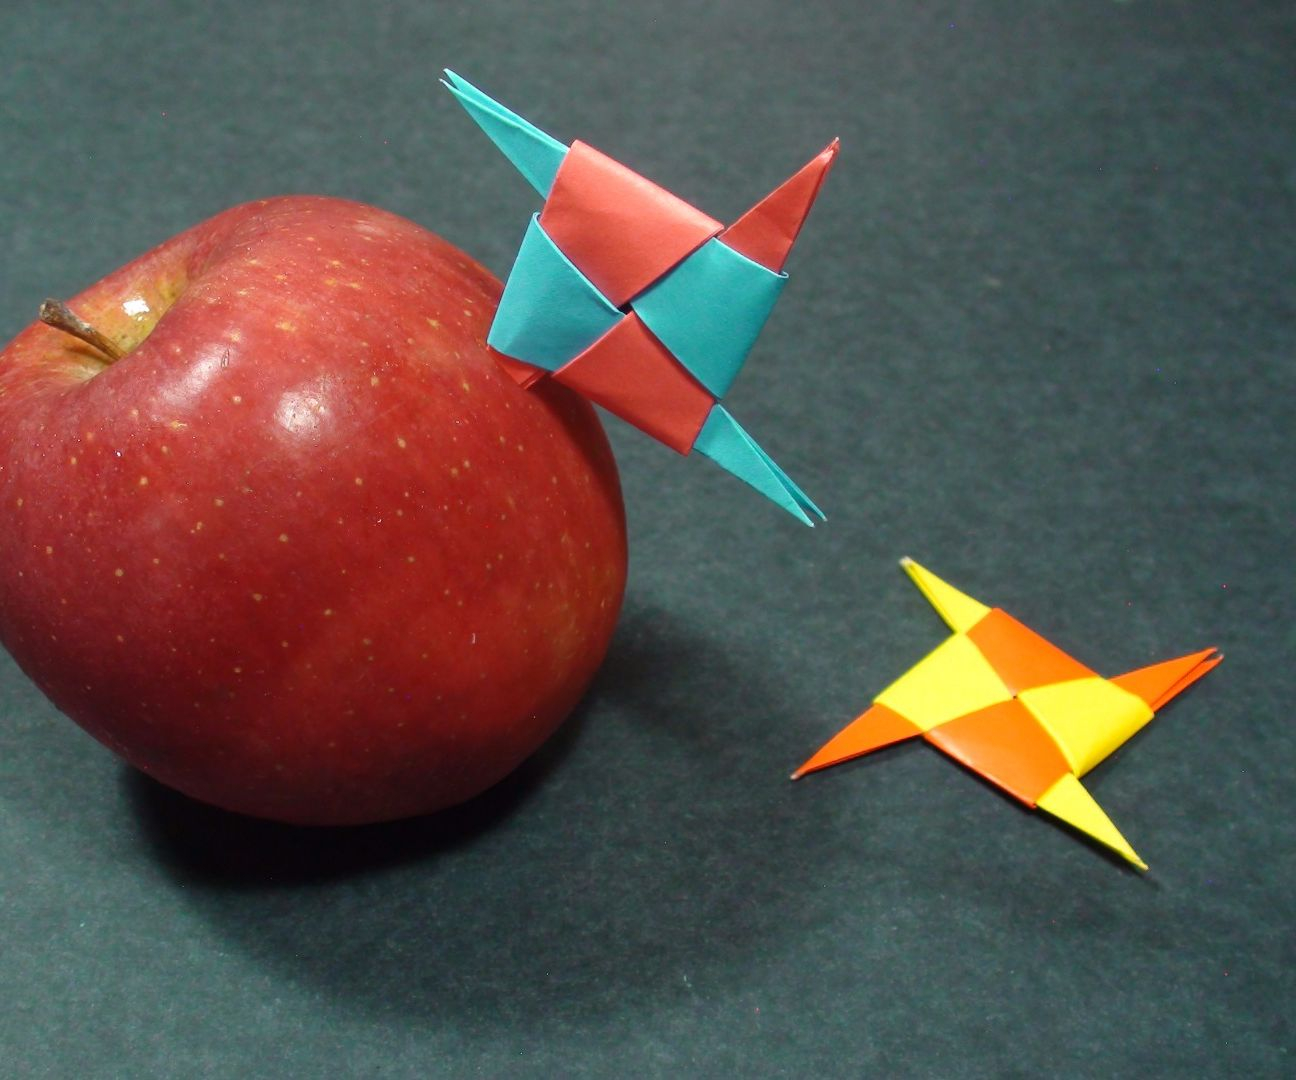 How To Make Origami Ninja Star How To Make A Paper Pointy Ninja Star Origami Throwing Star Shurikens